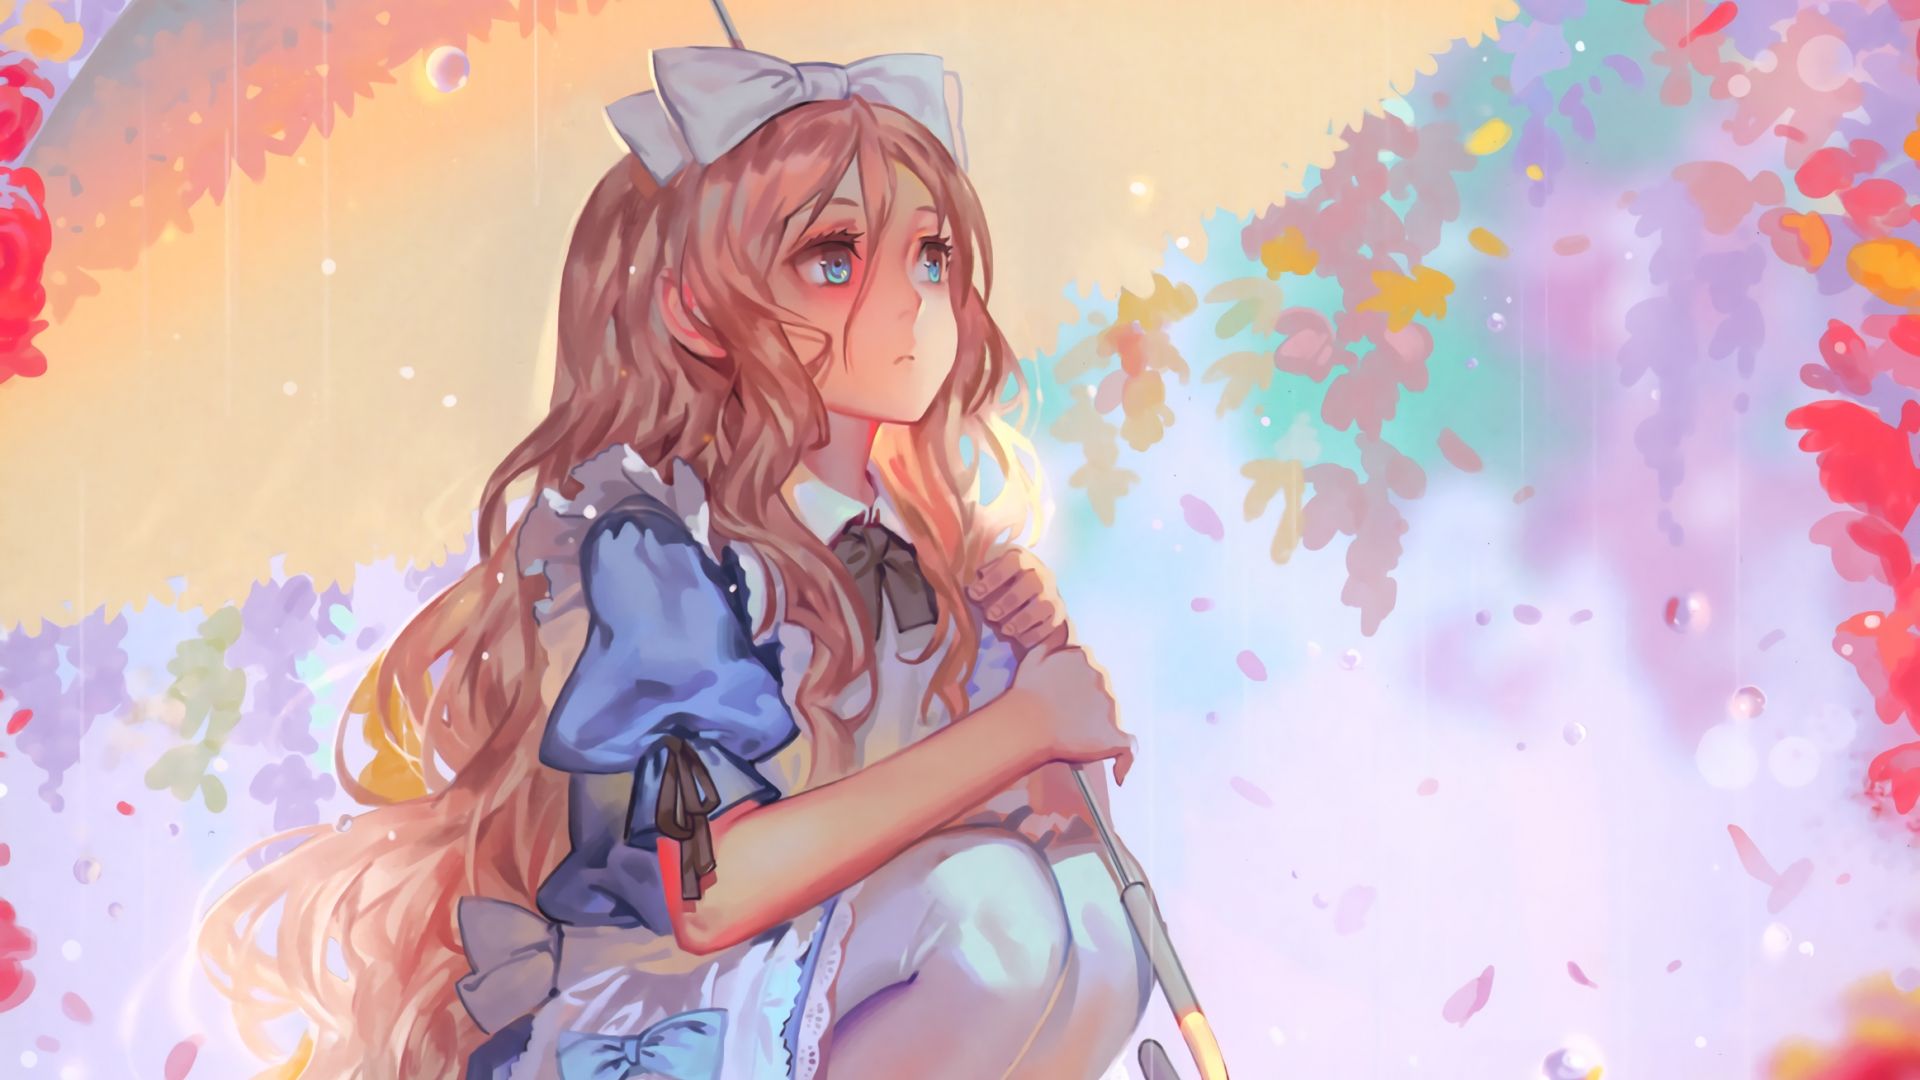 10 Best Alice In Wonderland Inspired Anime Episodes Ranked